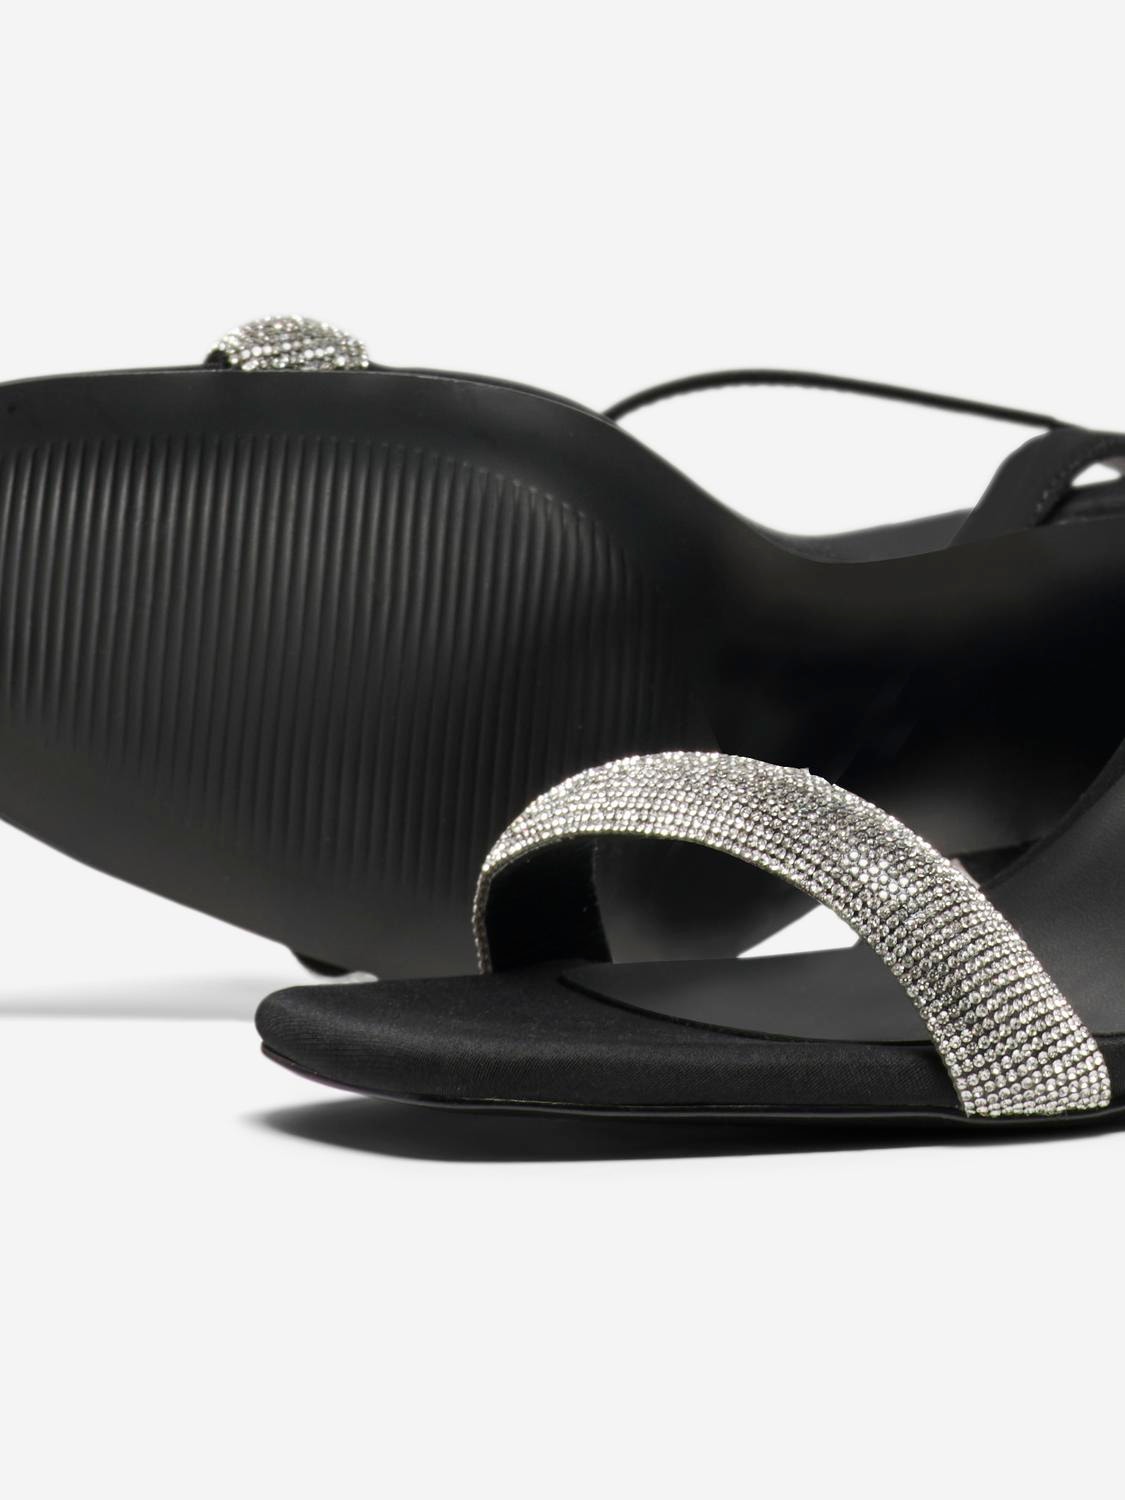 ONLY High heeled sandals -Black - 15319150